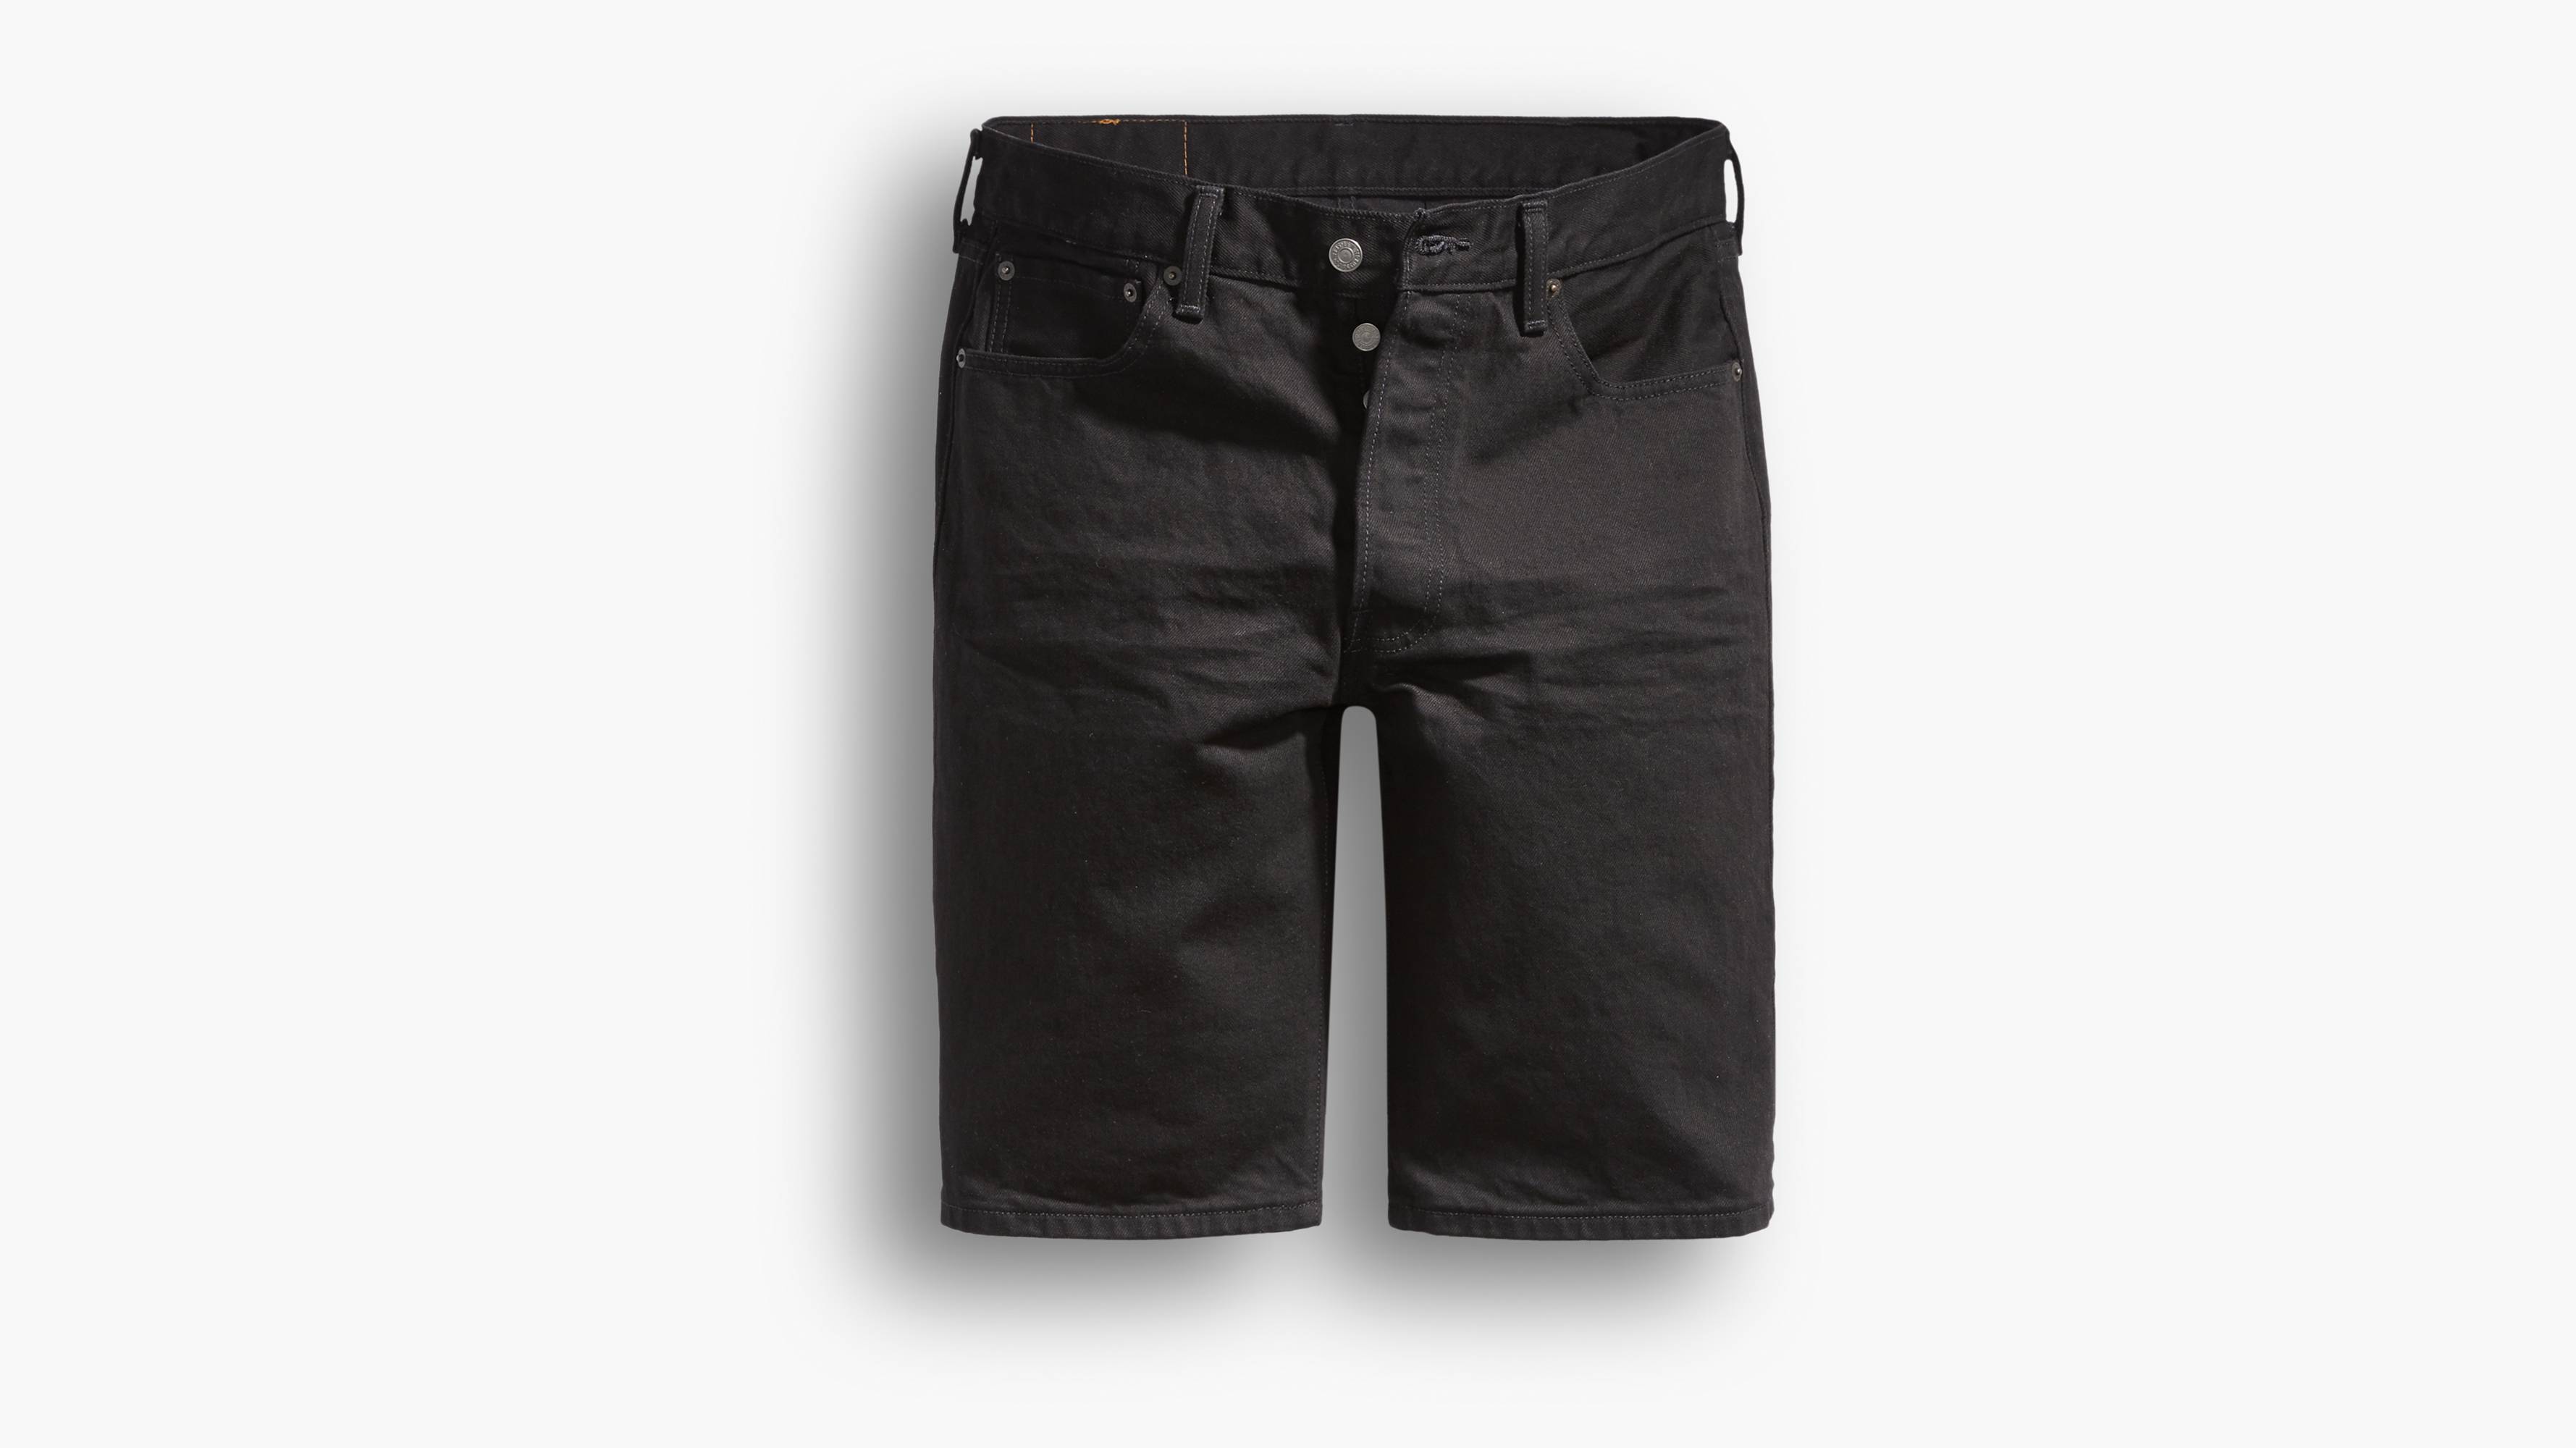 denim shorts for men levis